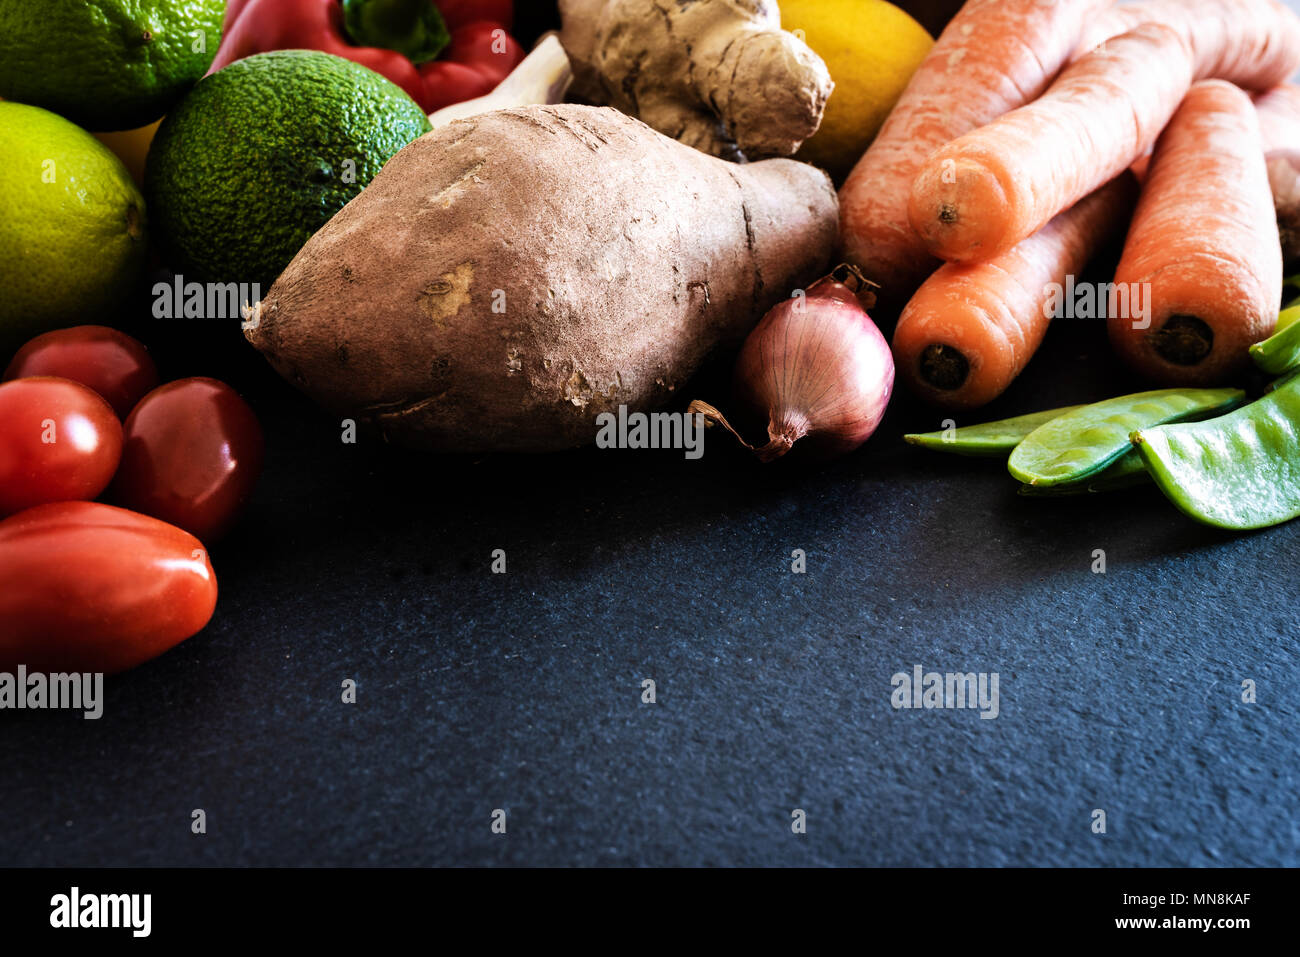 Raw de frescas frutas y verduras orgánicas en slate cocina comer sano concepto Foto de stock